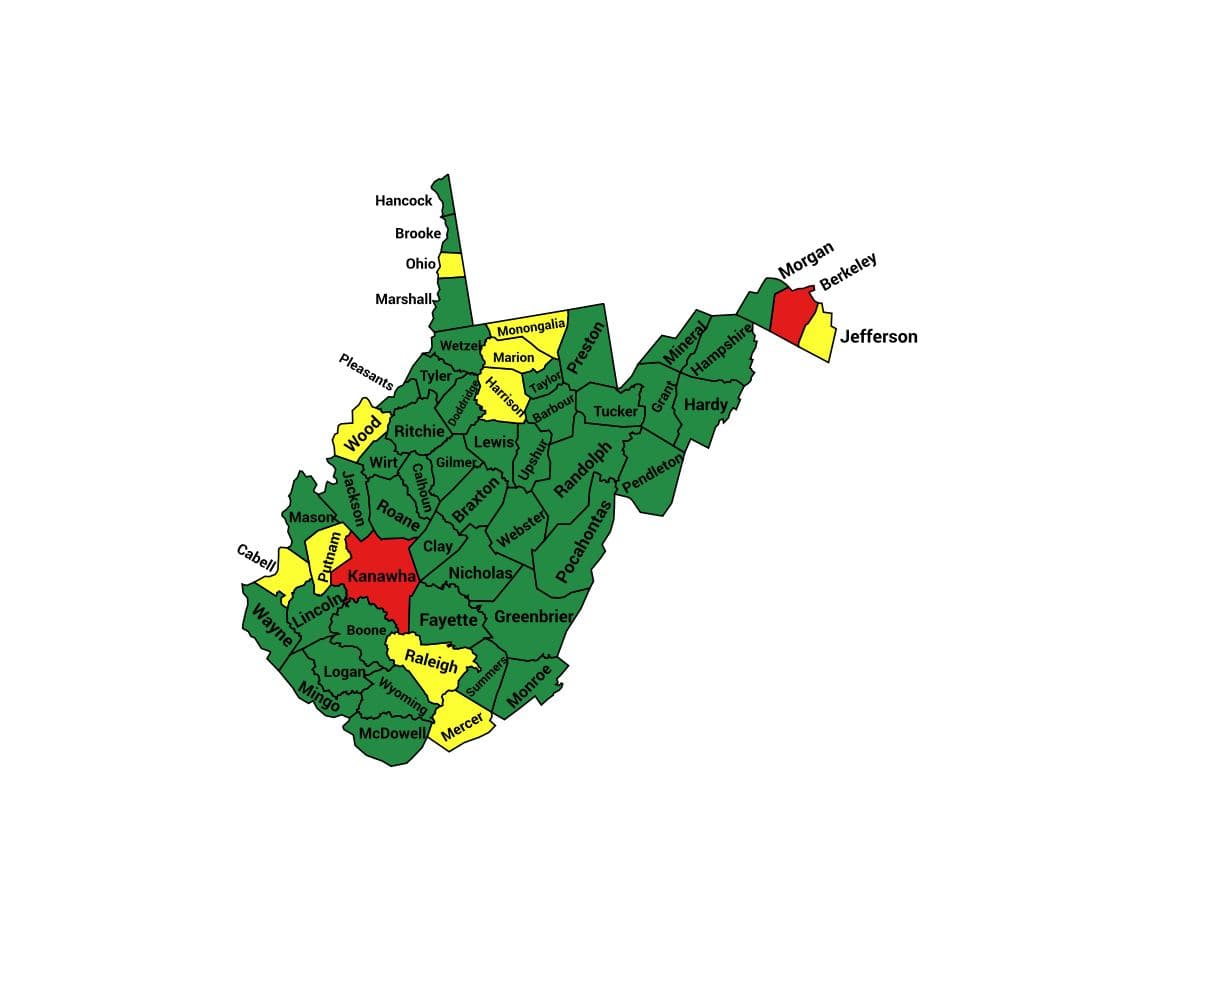 Seth Keshel County Trend Map for West Virginia